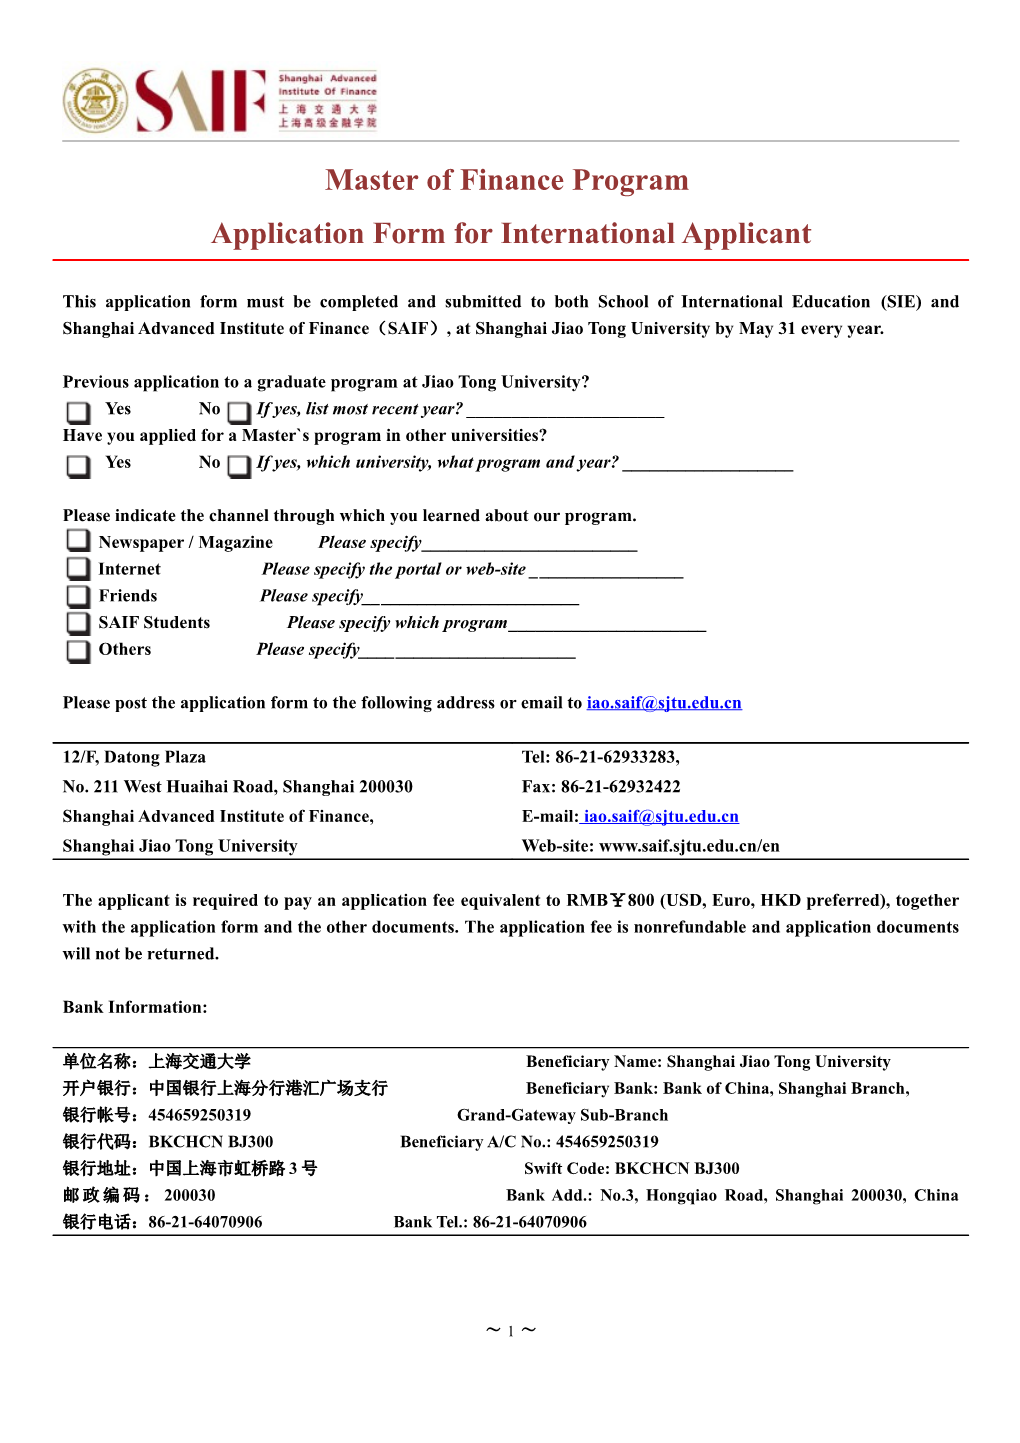 Previous Application to a Graduate Program at Jiao Tong University?